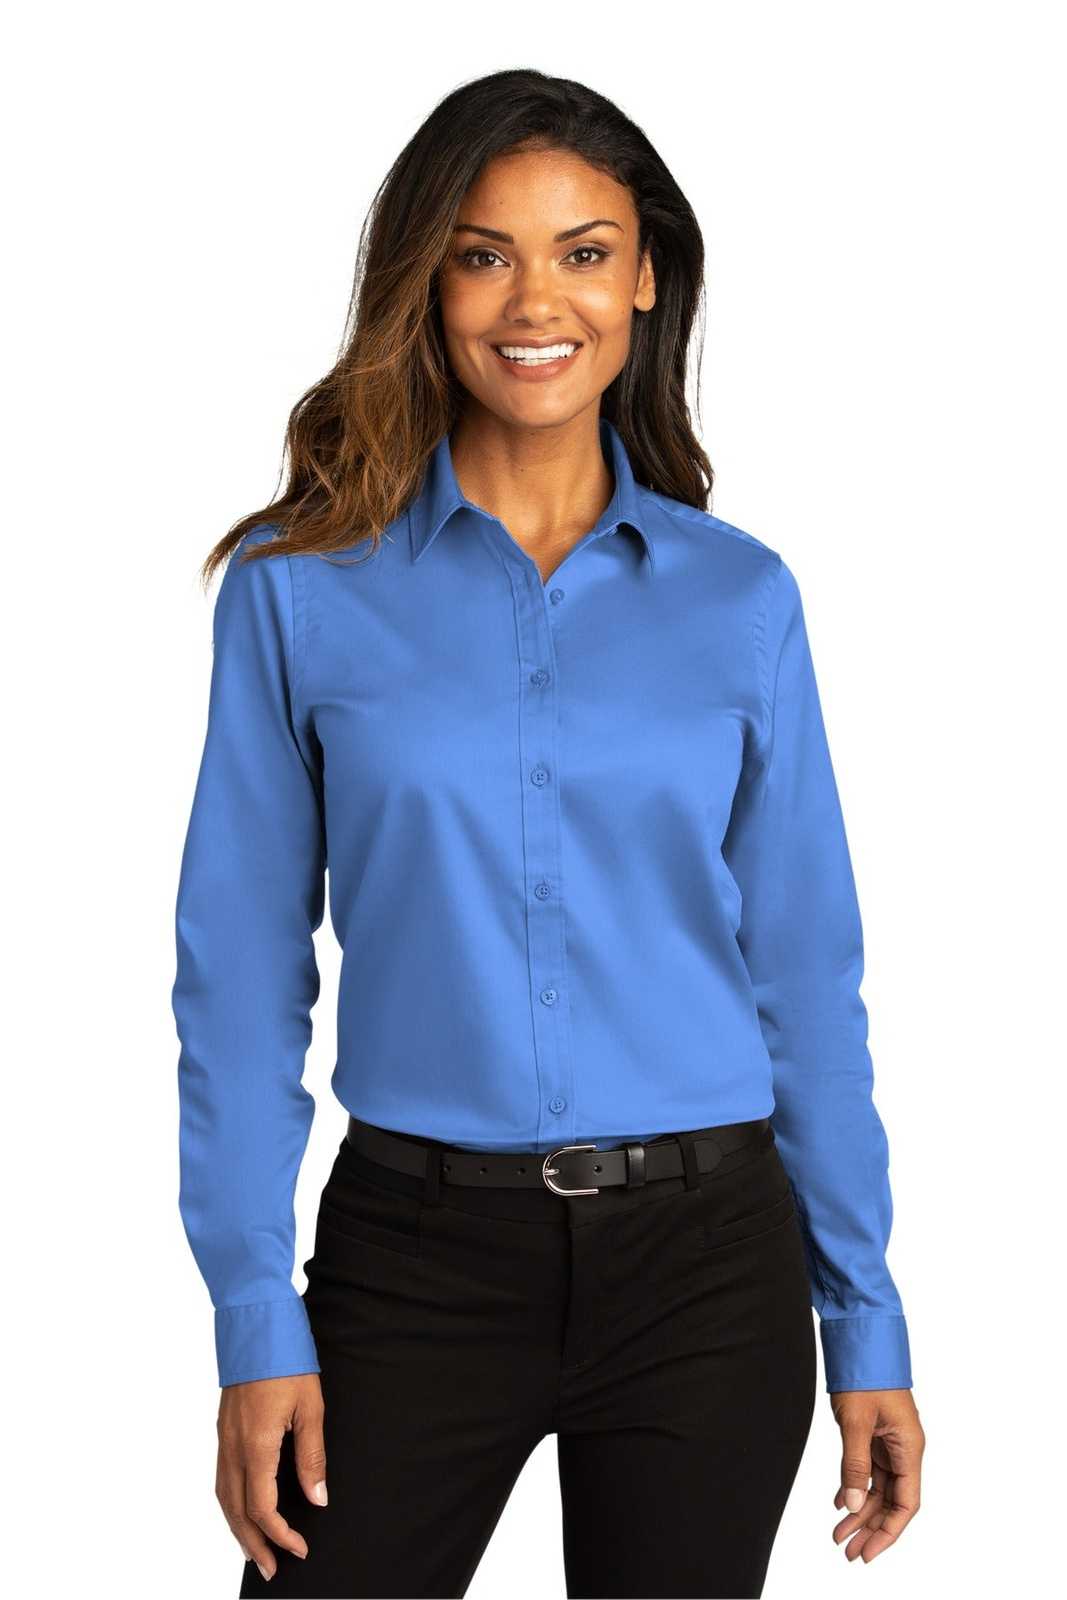 Port Authority LW808 Ladies Long Sleeve SuperPro React Twill Shirt - Ultramarine Blue - HIT a Double - 1